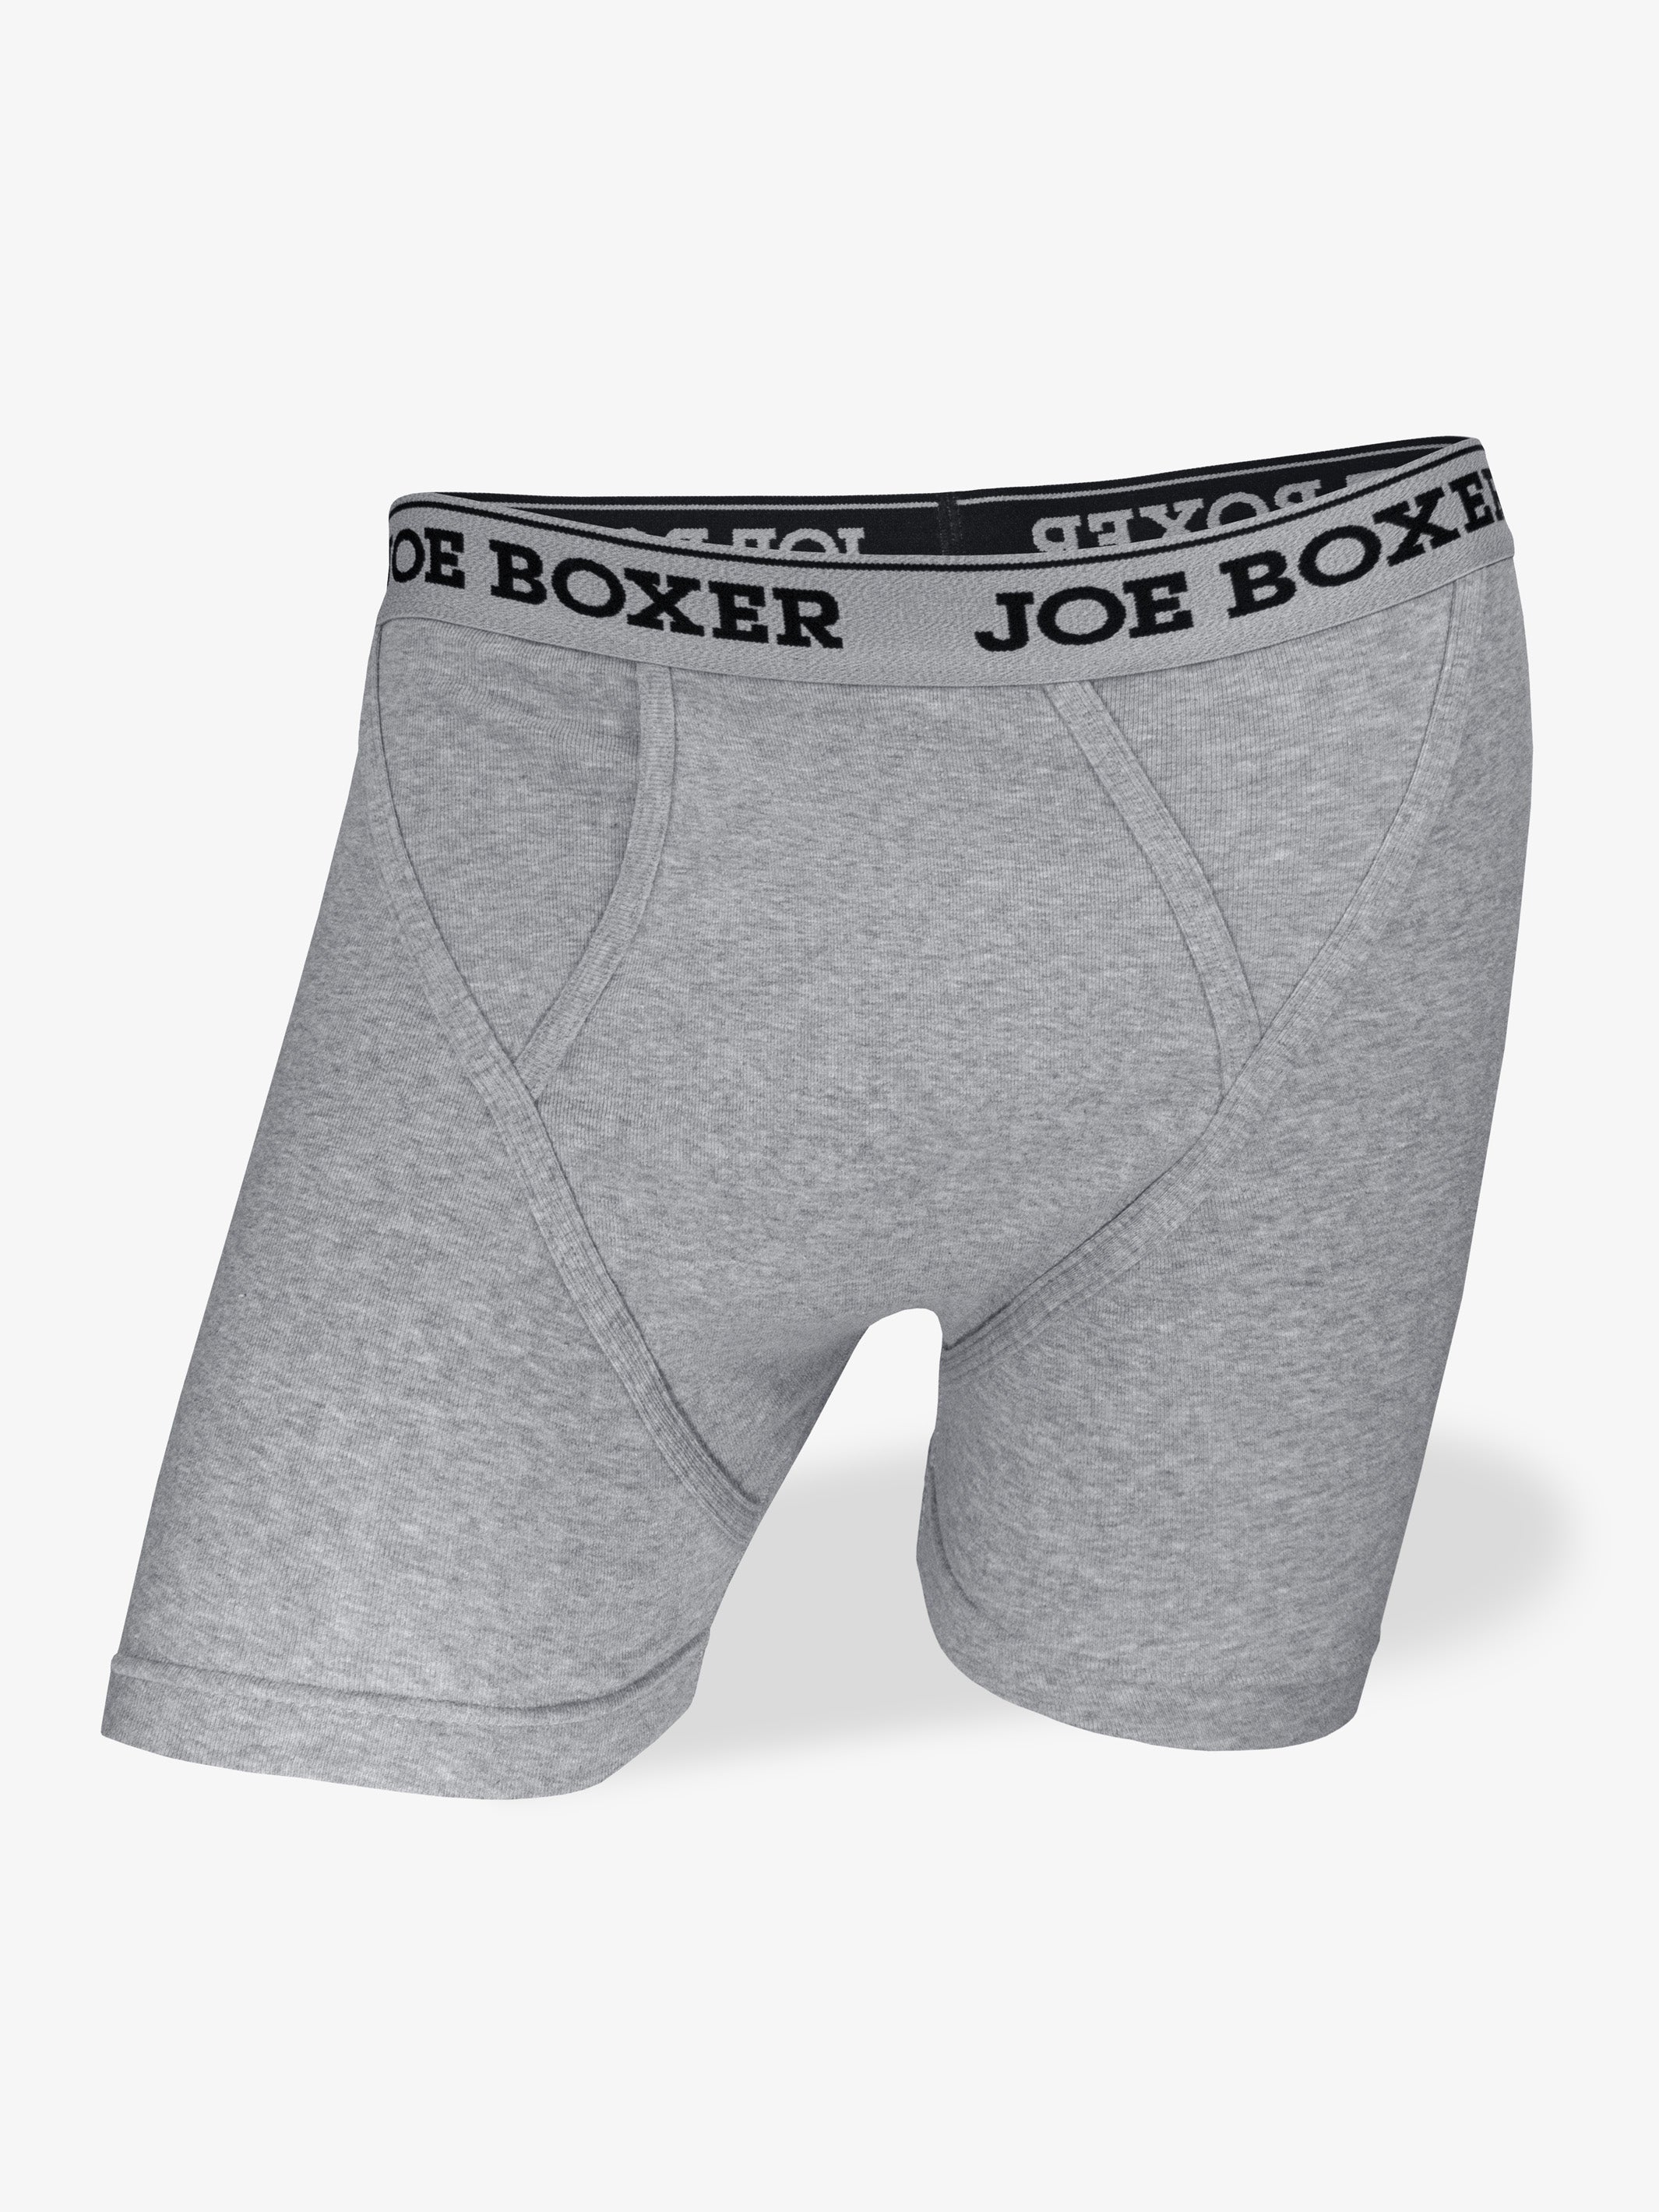 Mens Underwear Multipacks, Shop Joe Boxer Canada Now